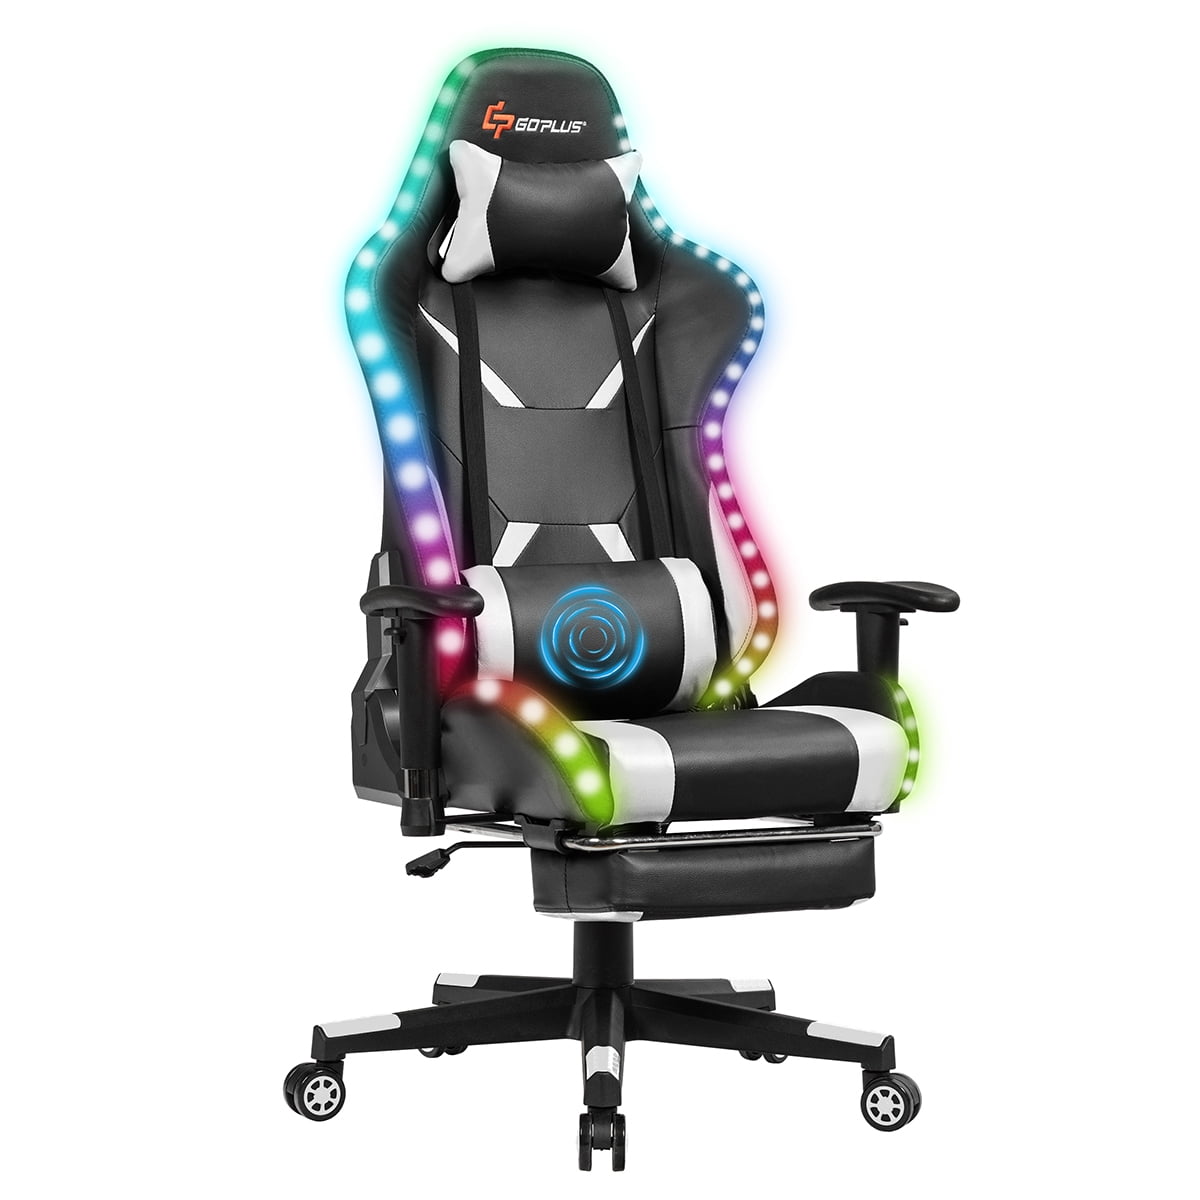 Goplus Gaming Racing Chair w/ LED &Massage Lumbar Support